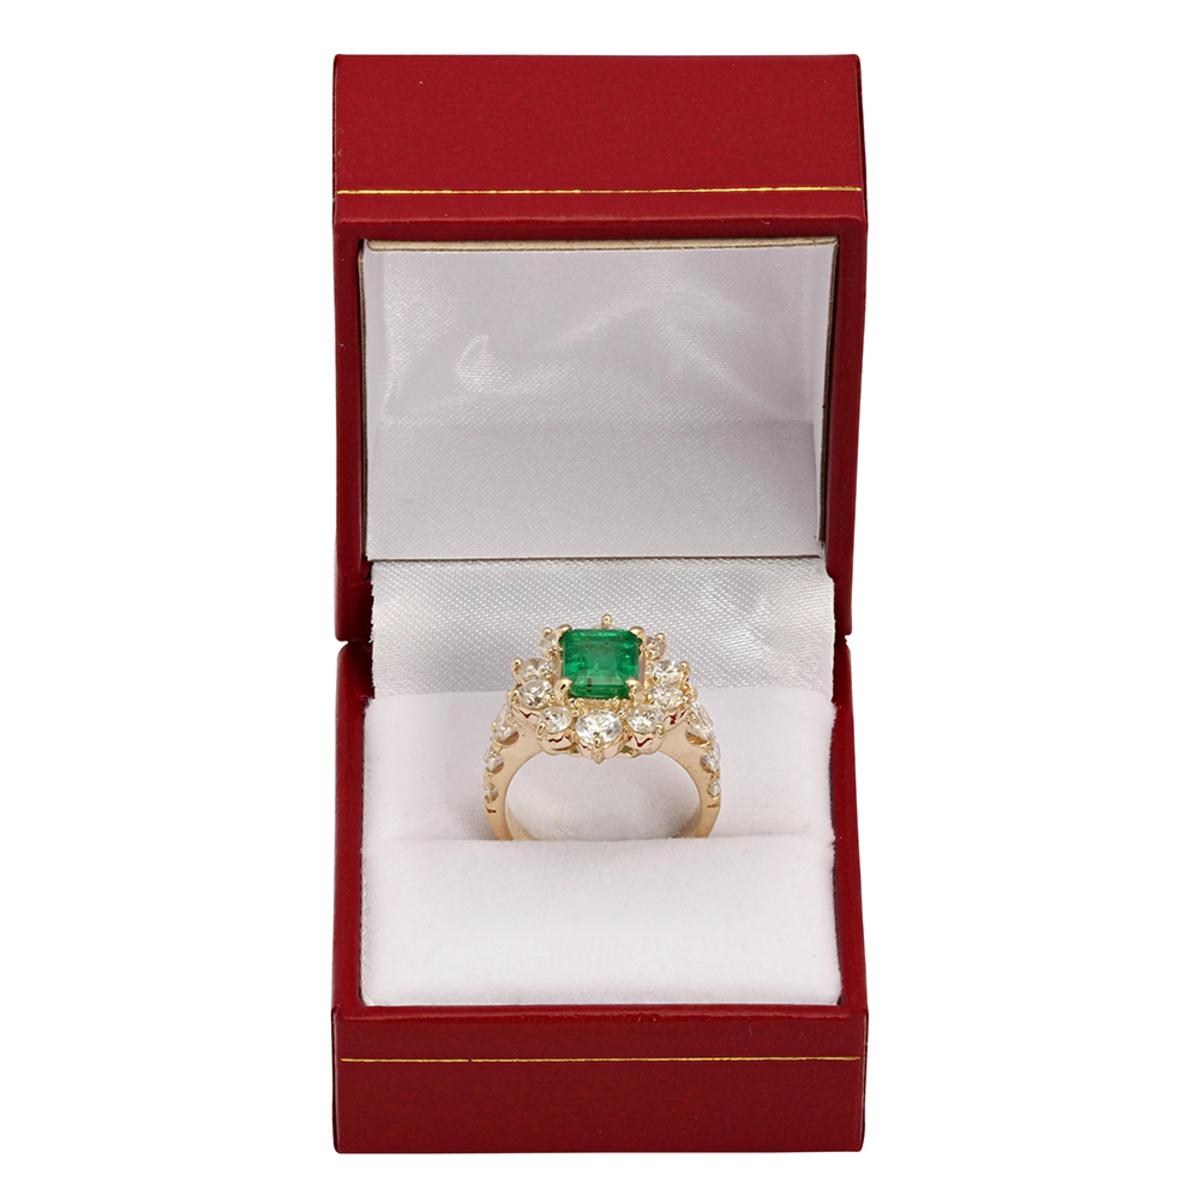 14k Yellow Gold 1.70ct Emerald 2.73ct Diamond Ring